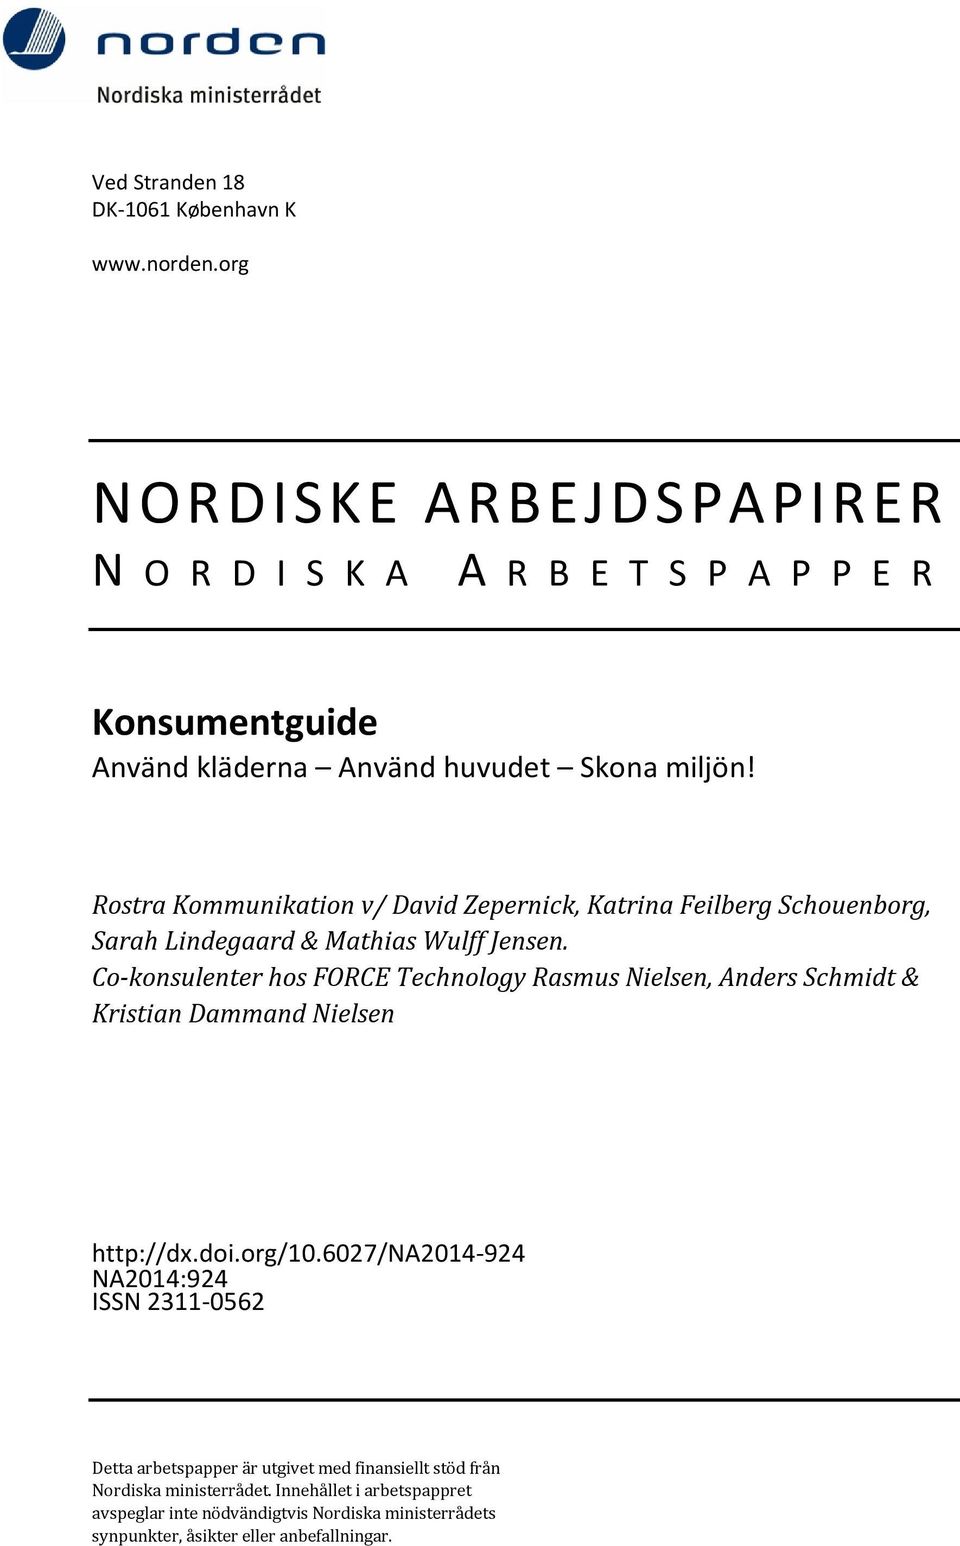 Rostra Kommunikation v/ David Zepernick, Katrina Feilberg Schouenborg, Sarah Lindegaard & Mathias Wulff Jensen.